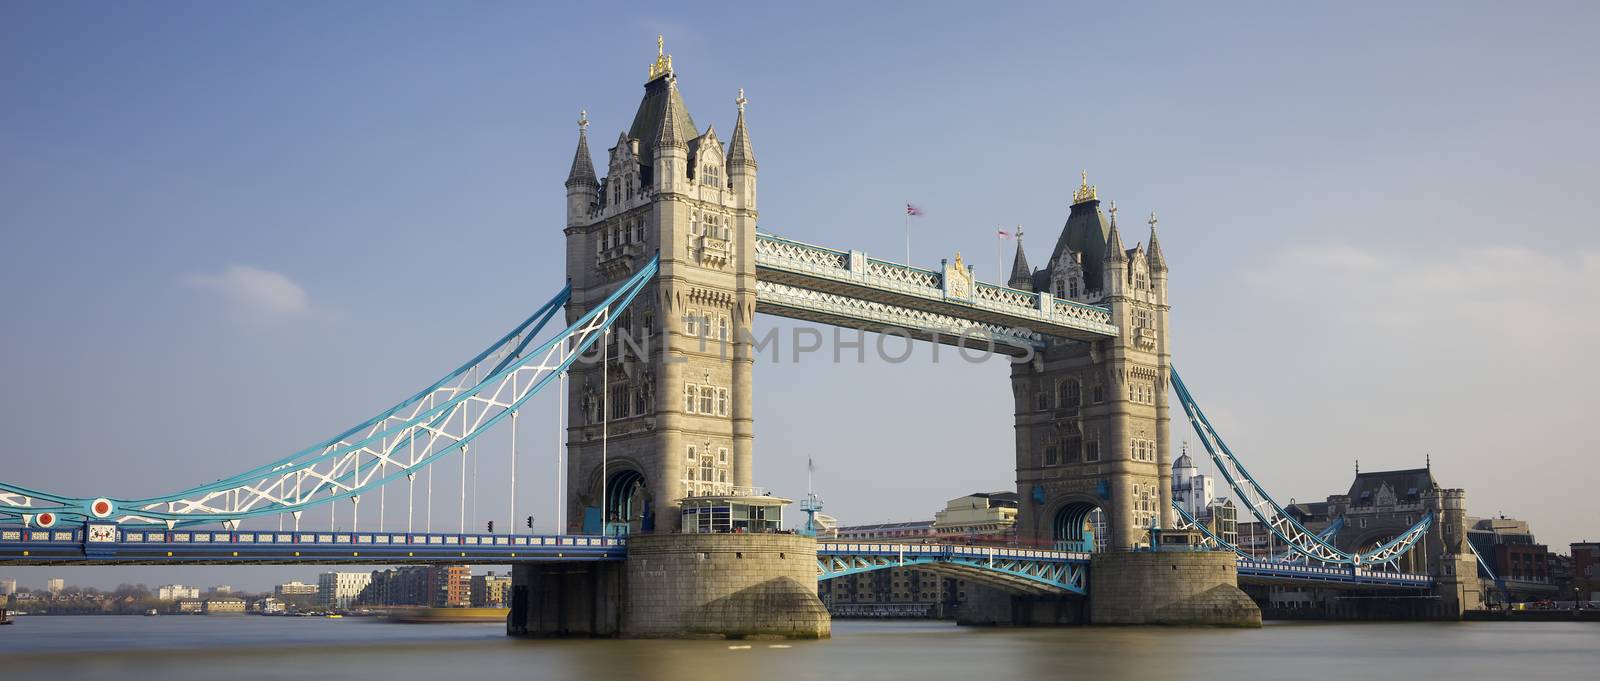 Panoramic view of Tower Bridge by vwalakte